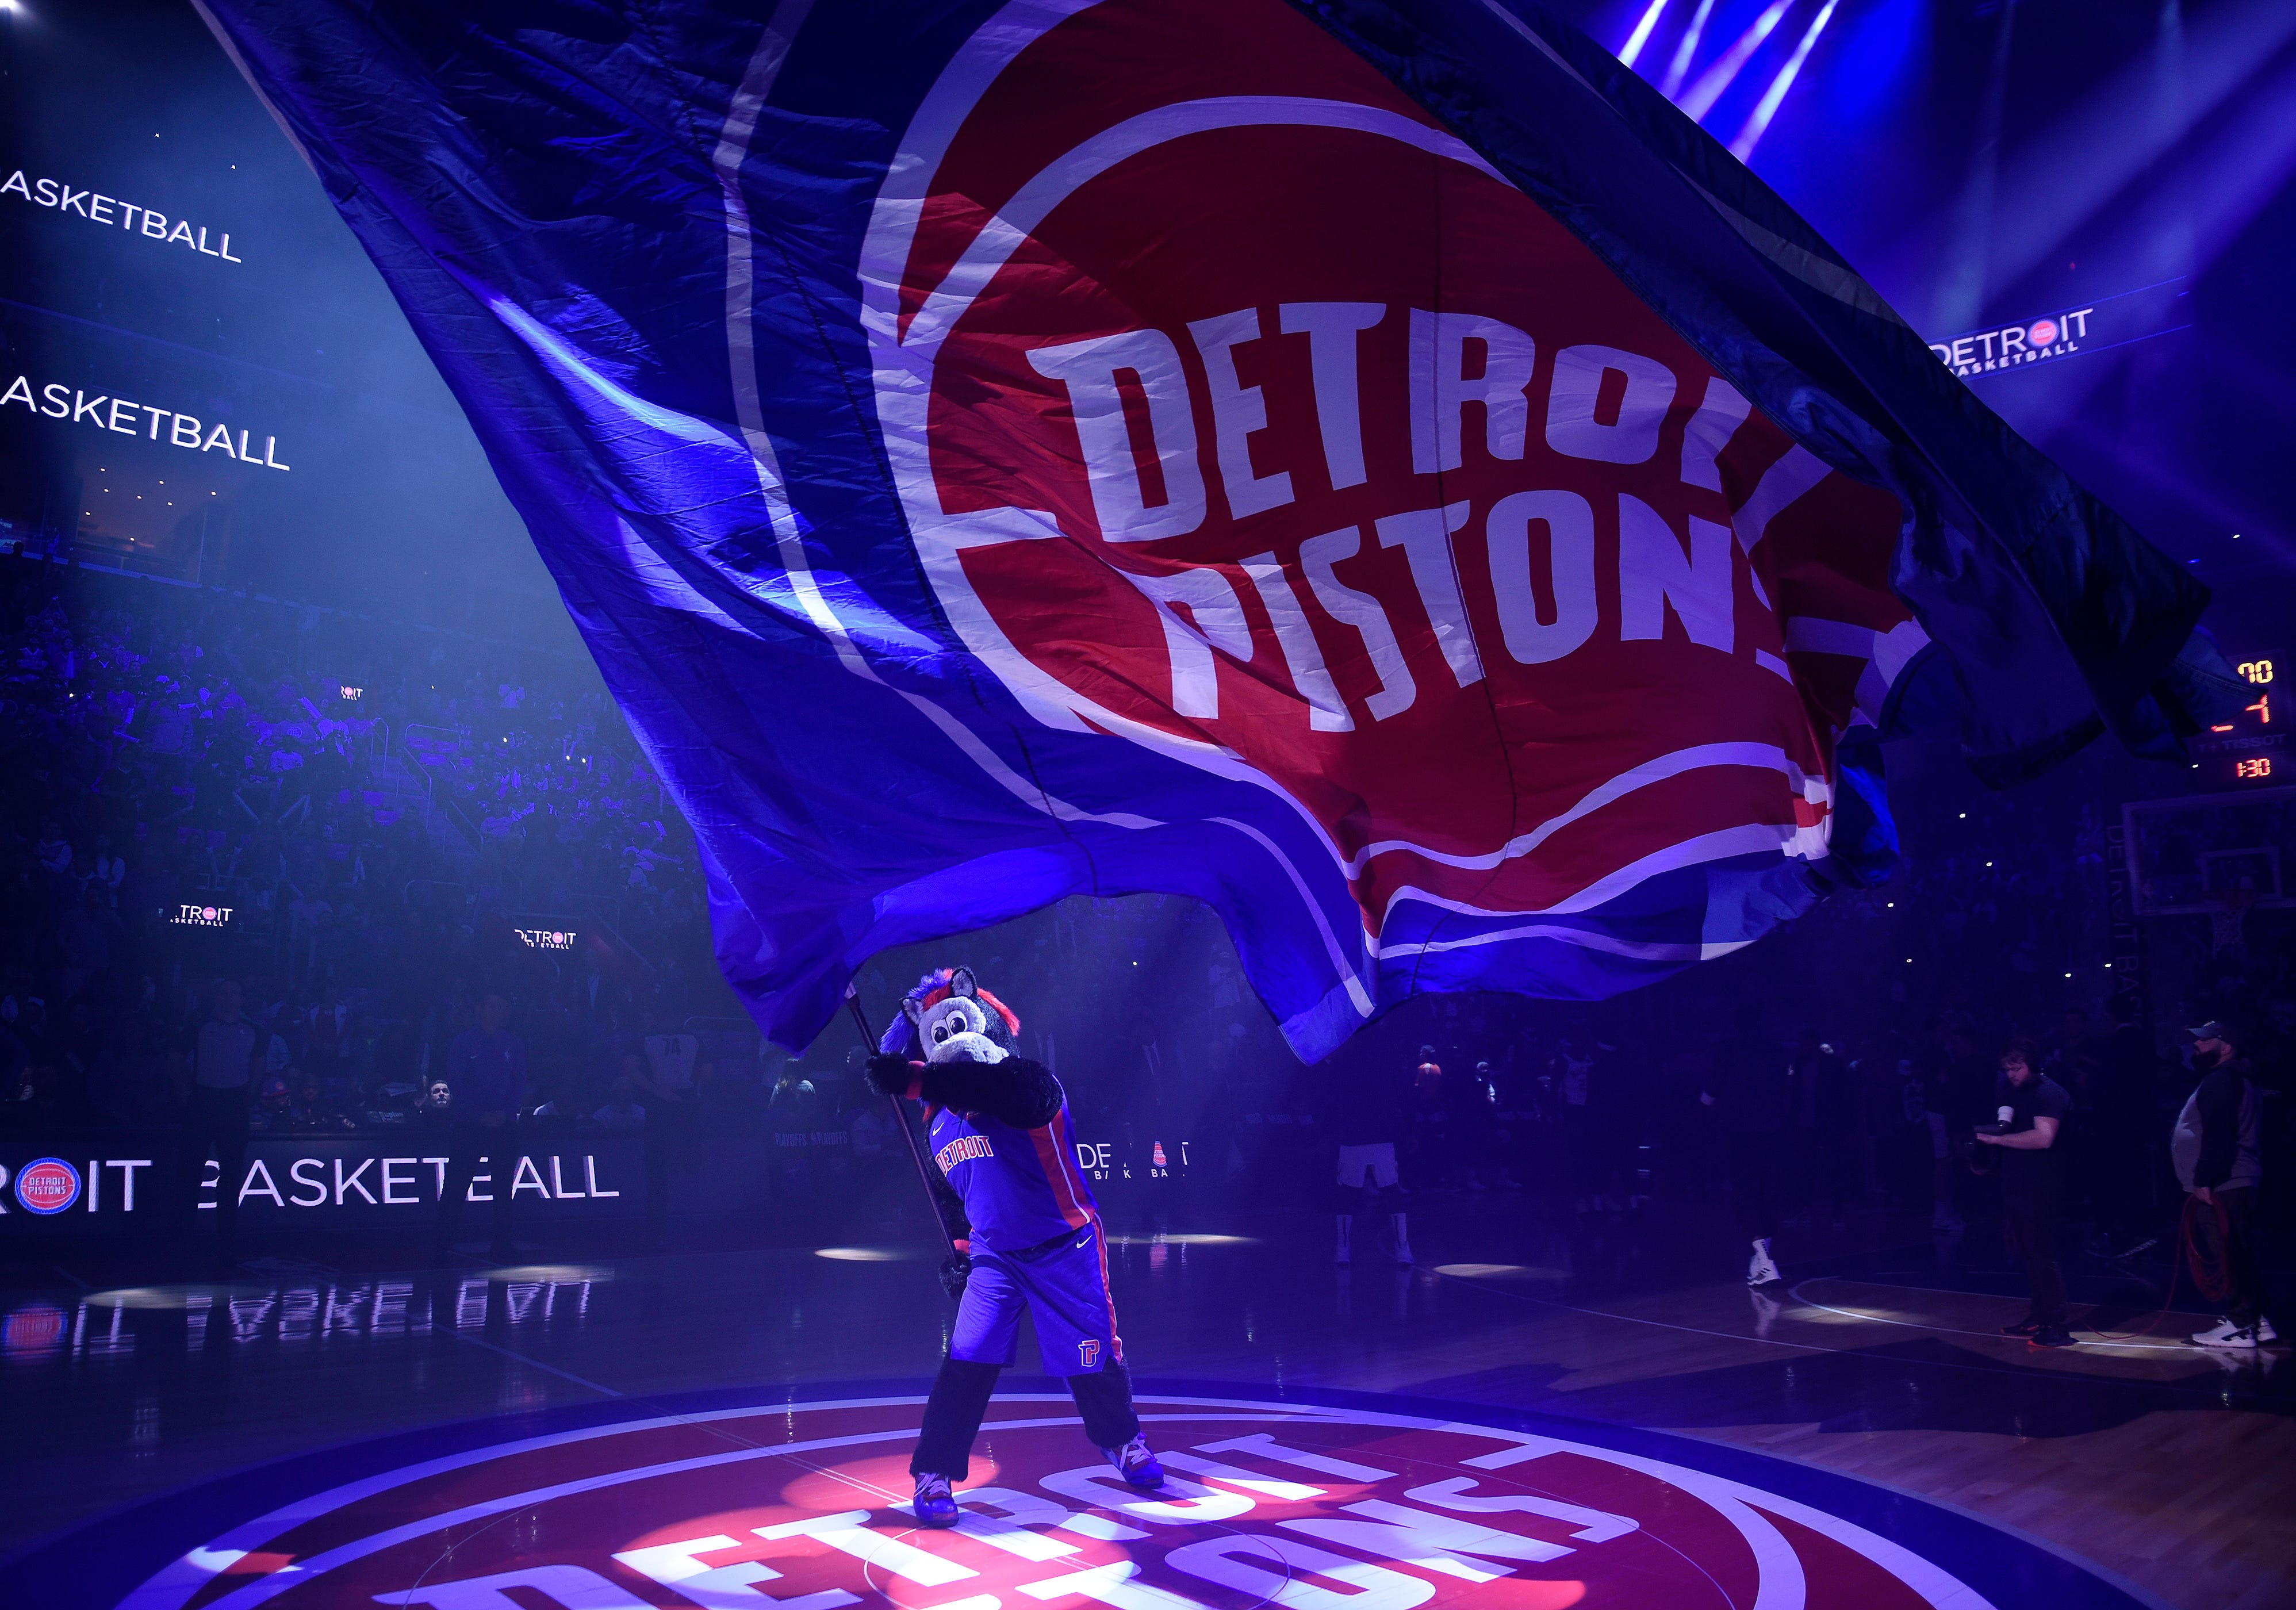 Pertandingan Detroit Pistons vs. Bulls dijadwal ulang;  Permainan Suns didorong kembali